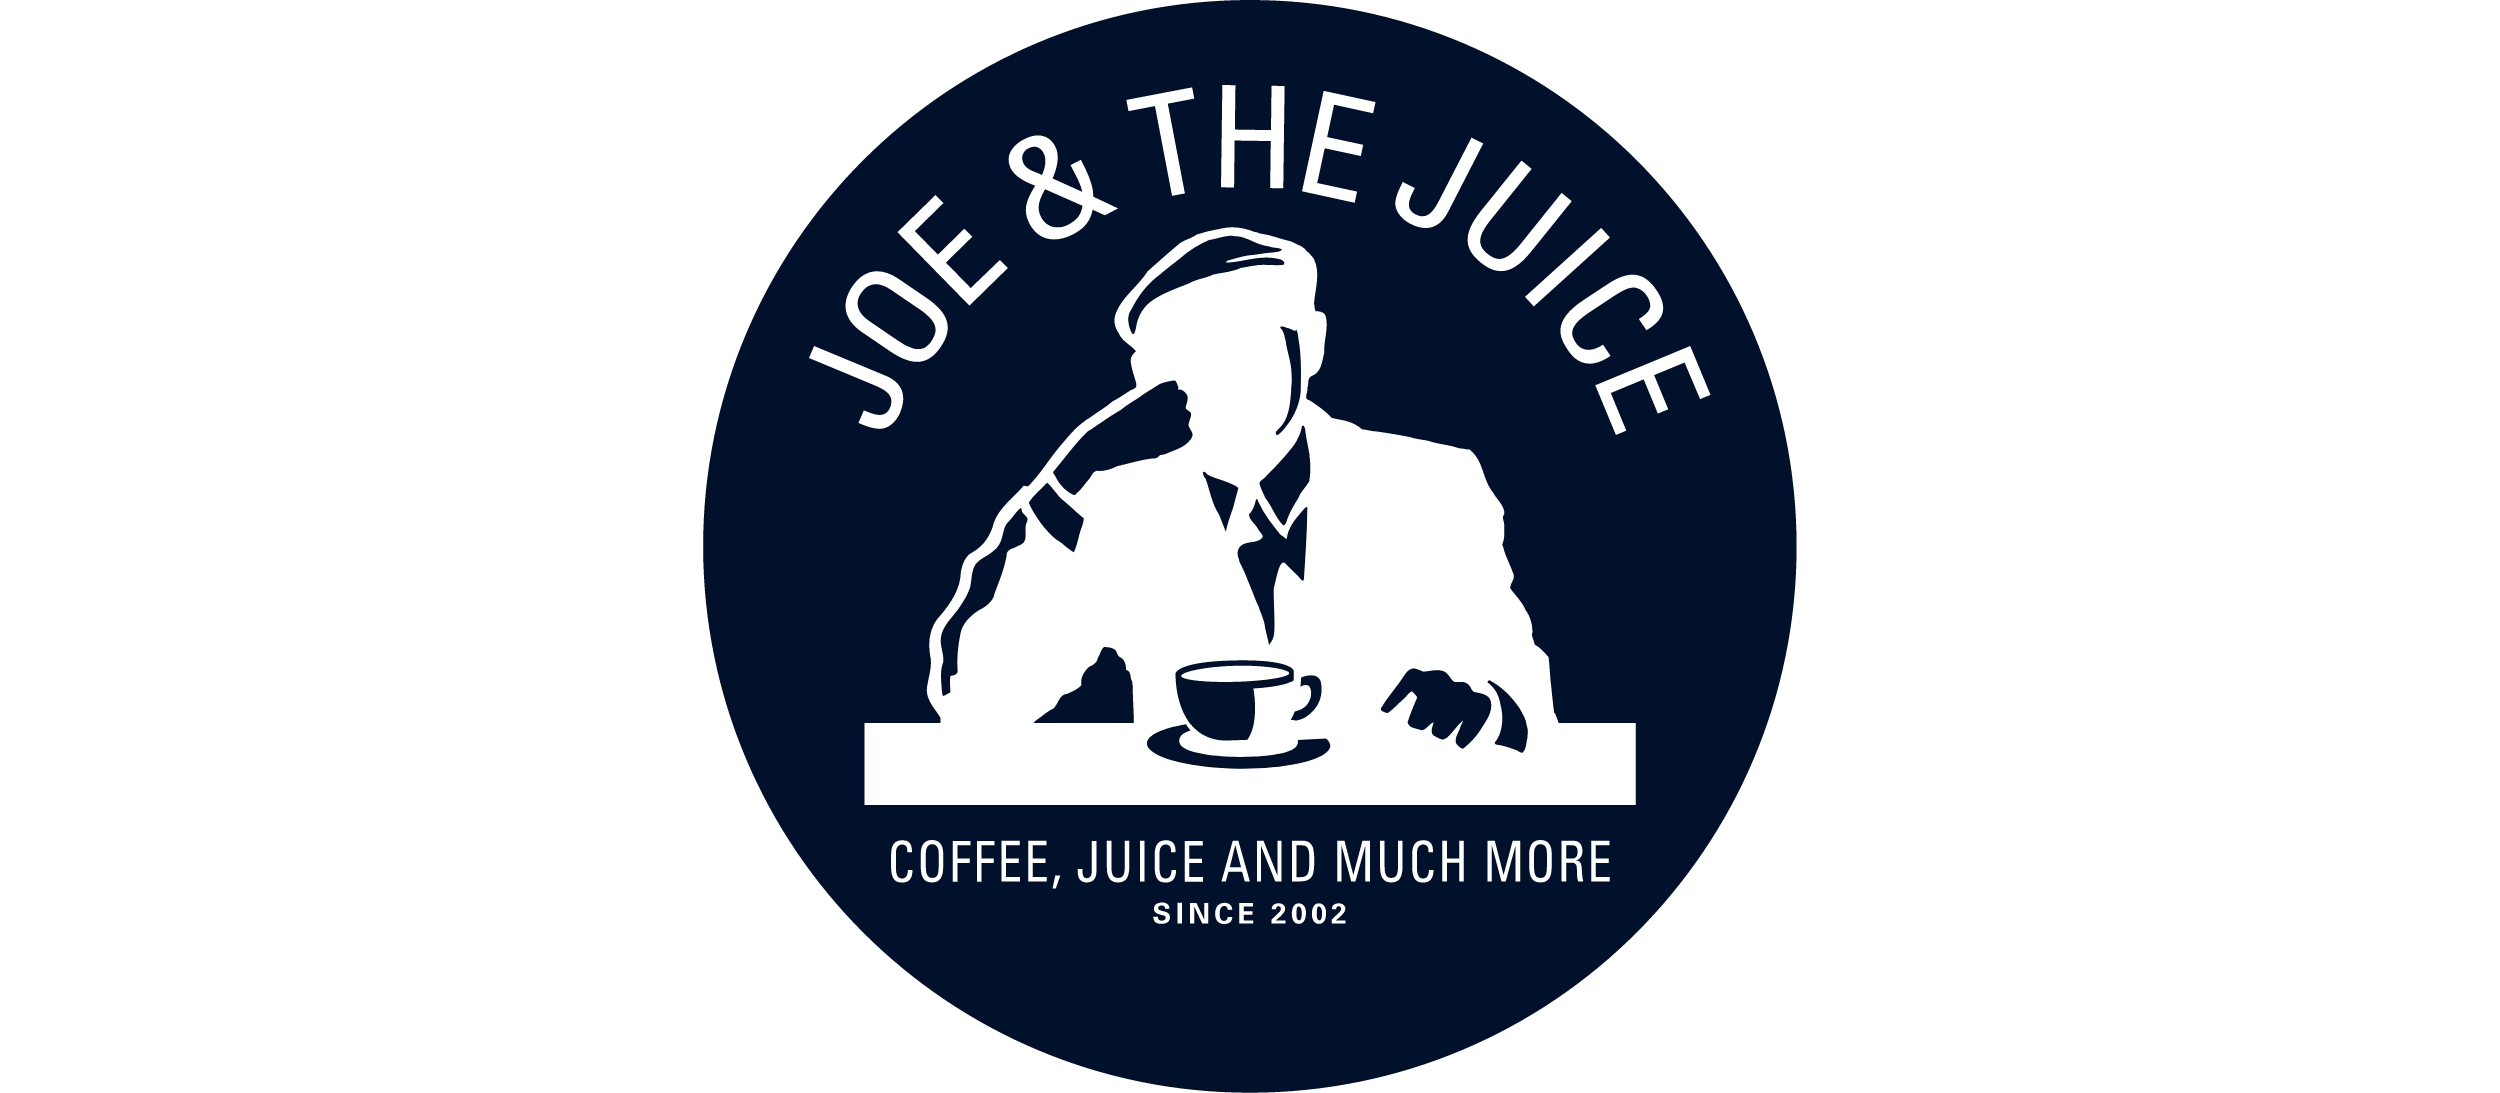 Joe & the juice logo